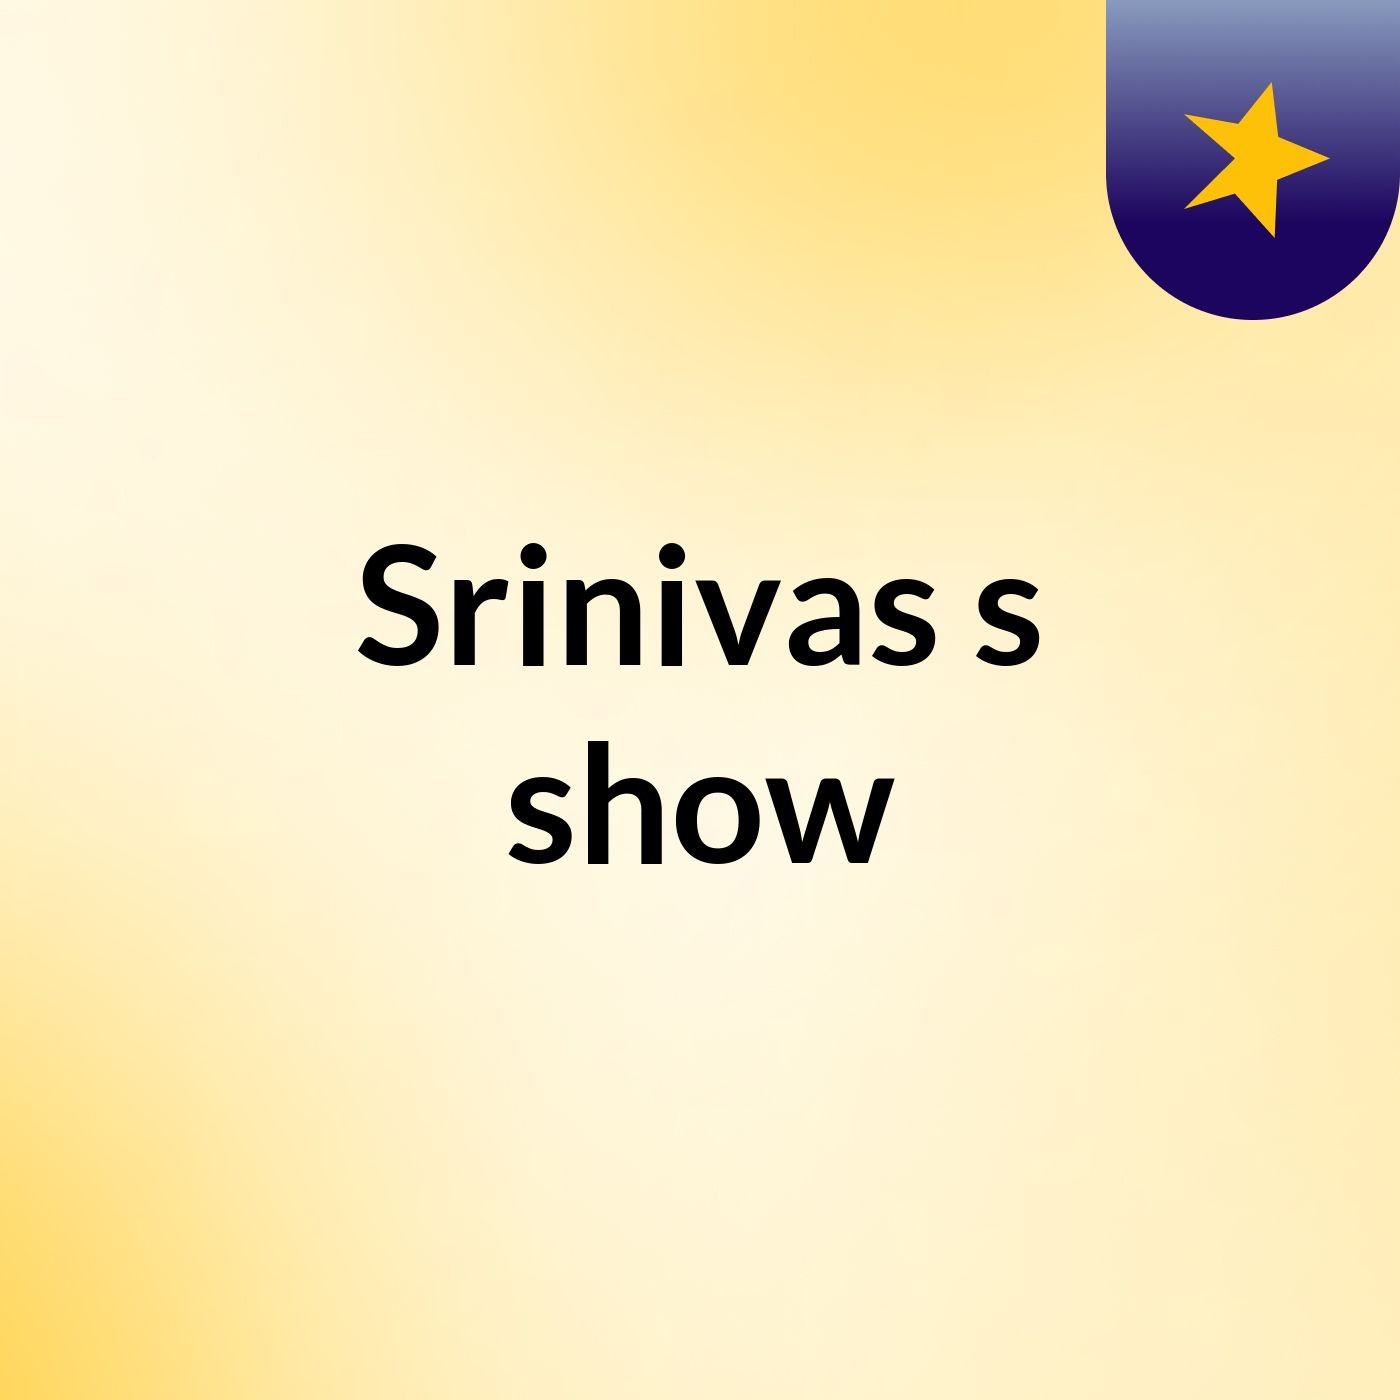 Srinivas's show